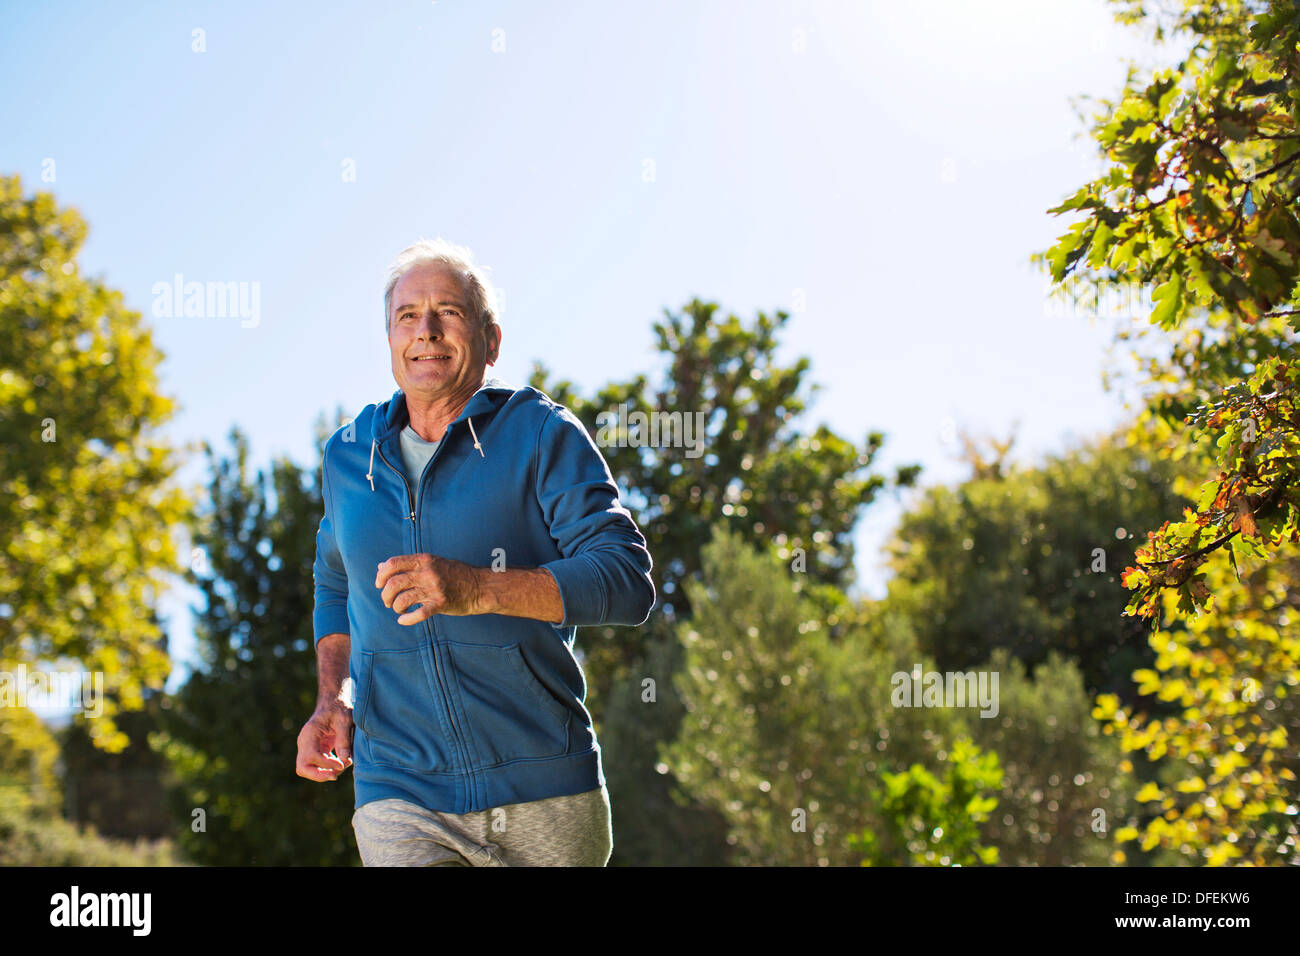 Senior man running in park Stock Photo